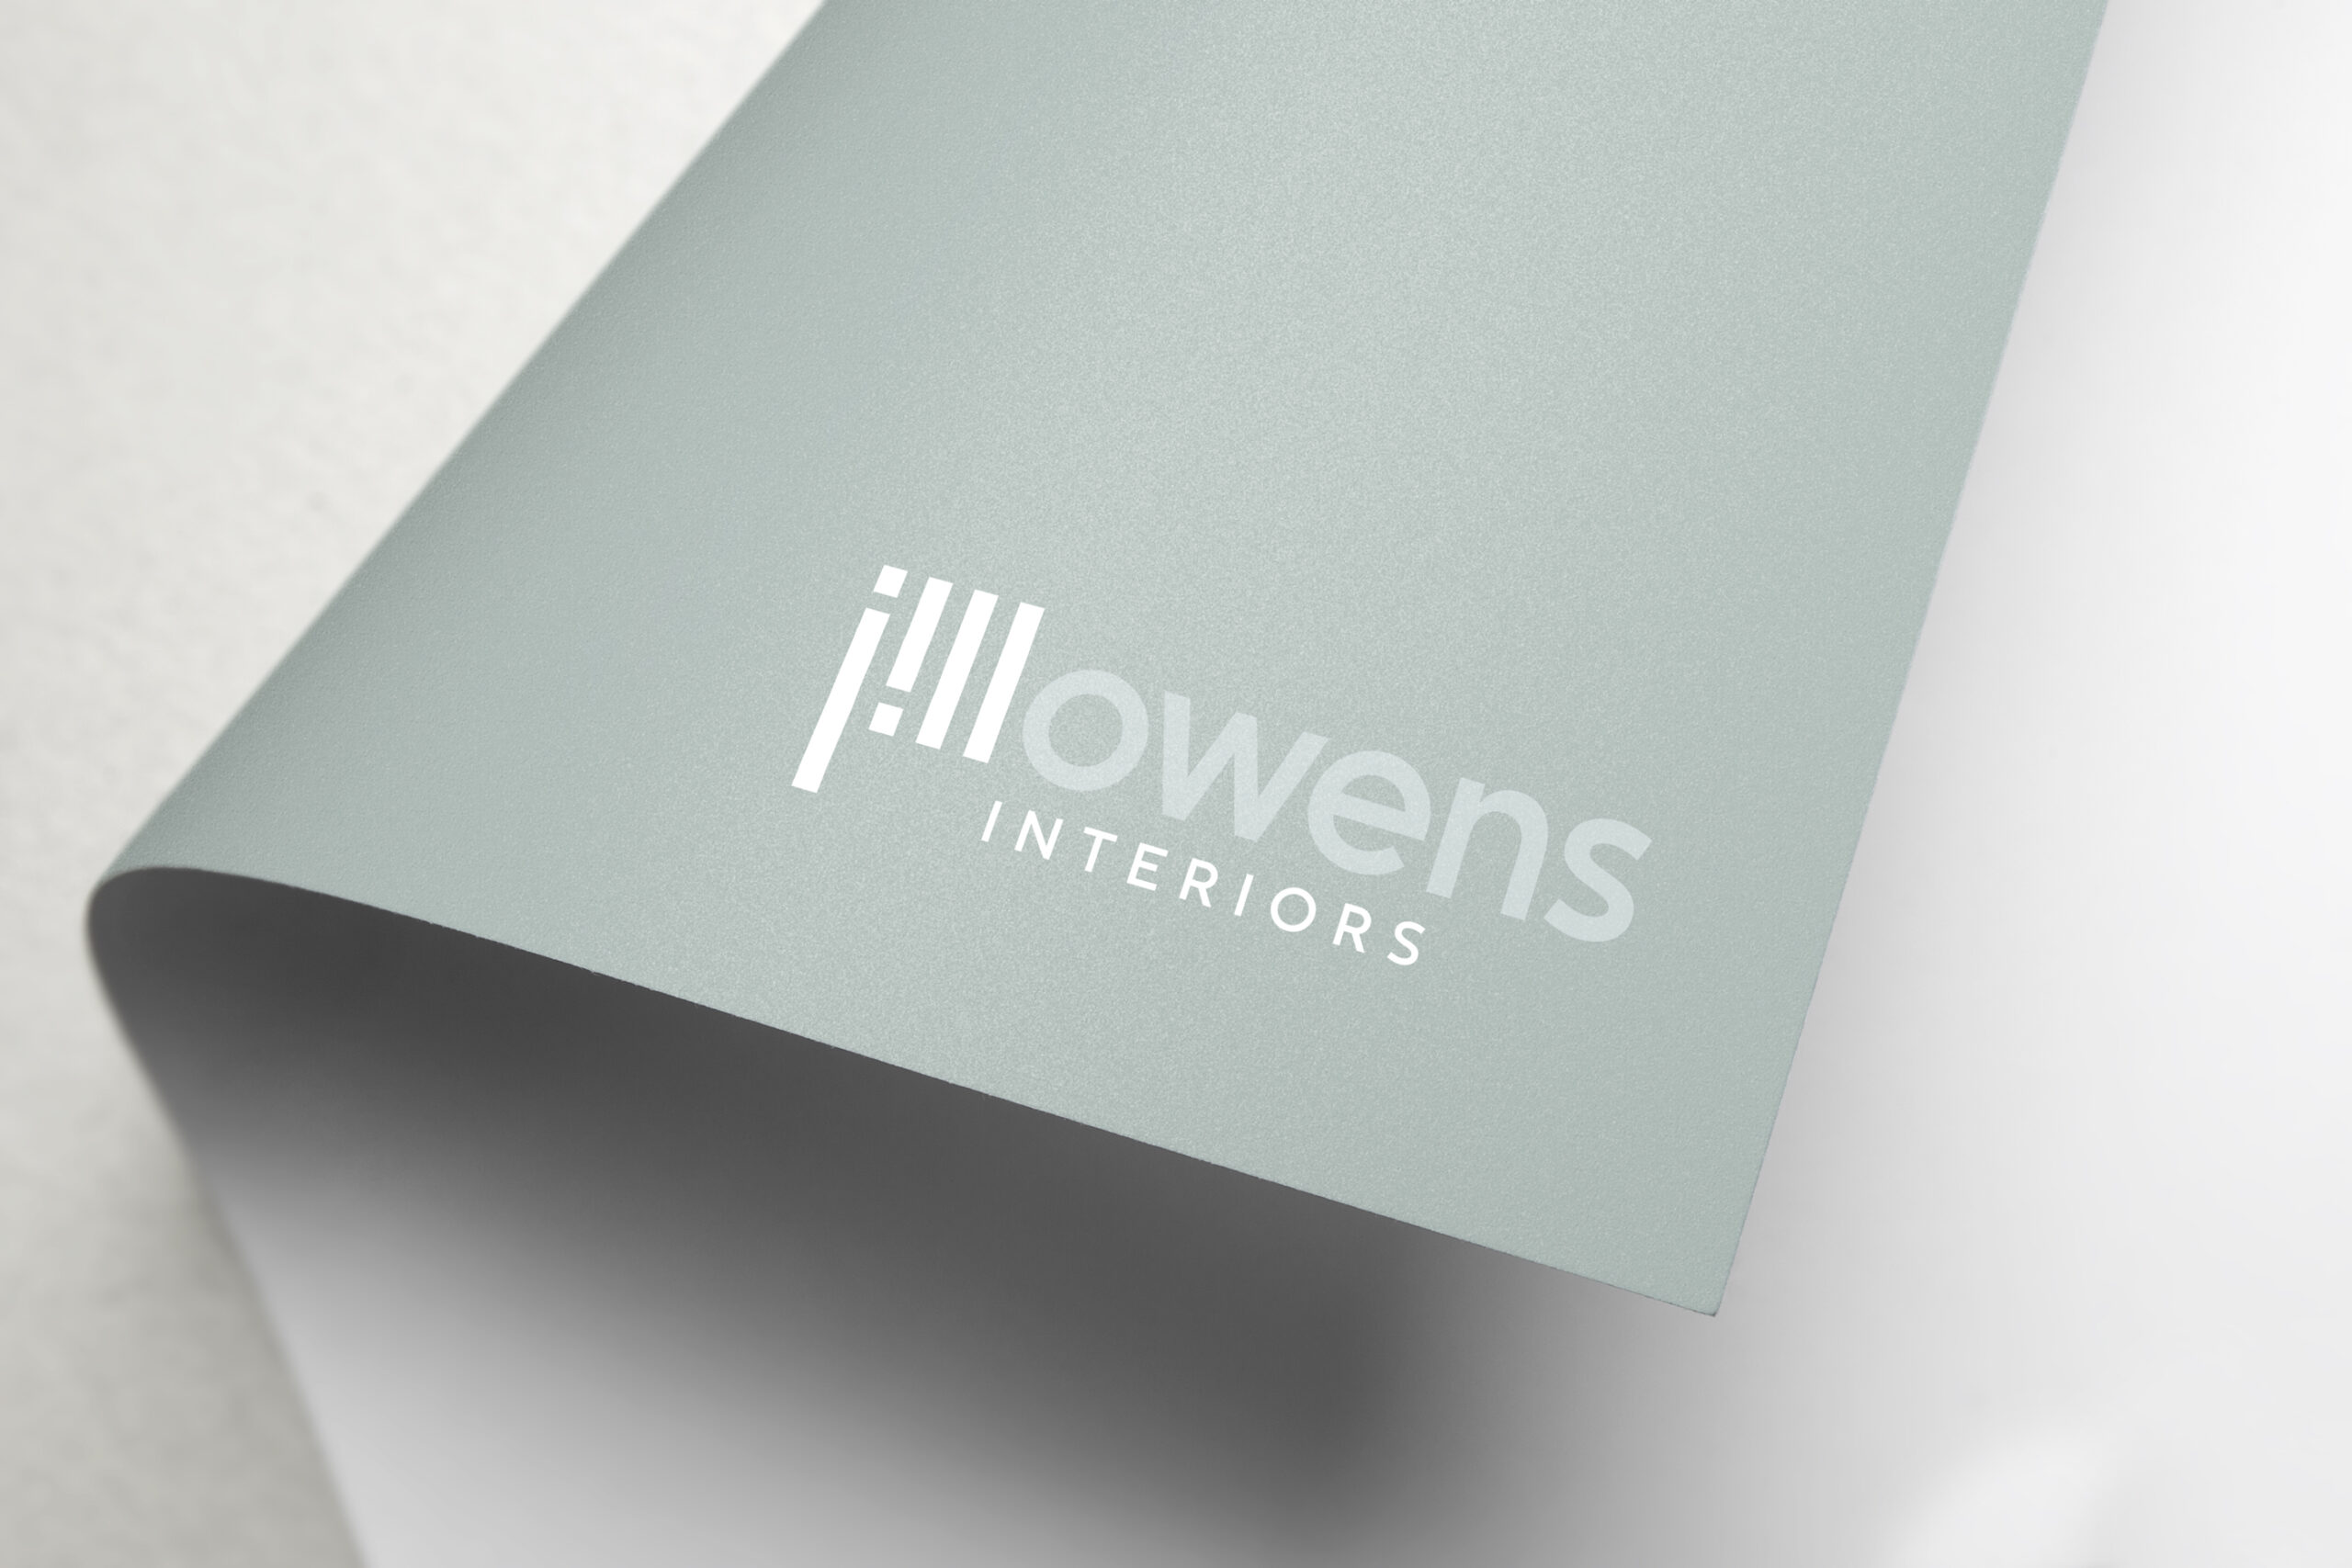 Jill Owens Interiors Brand Development by TL Design Co.